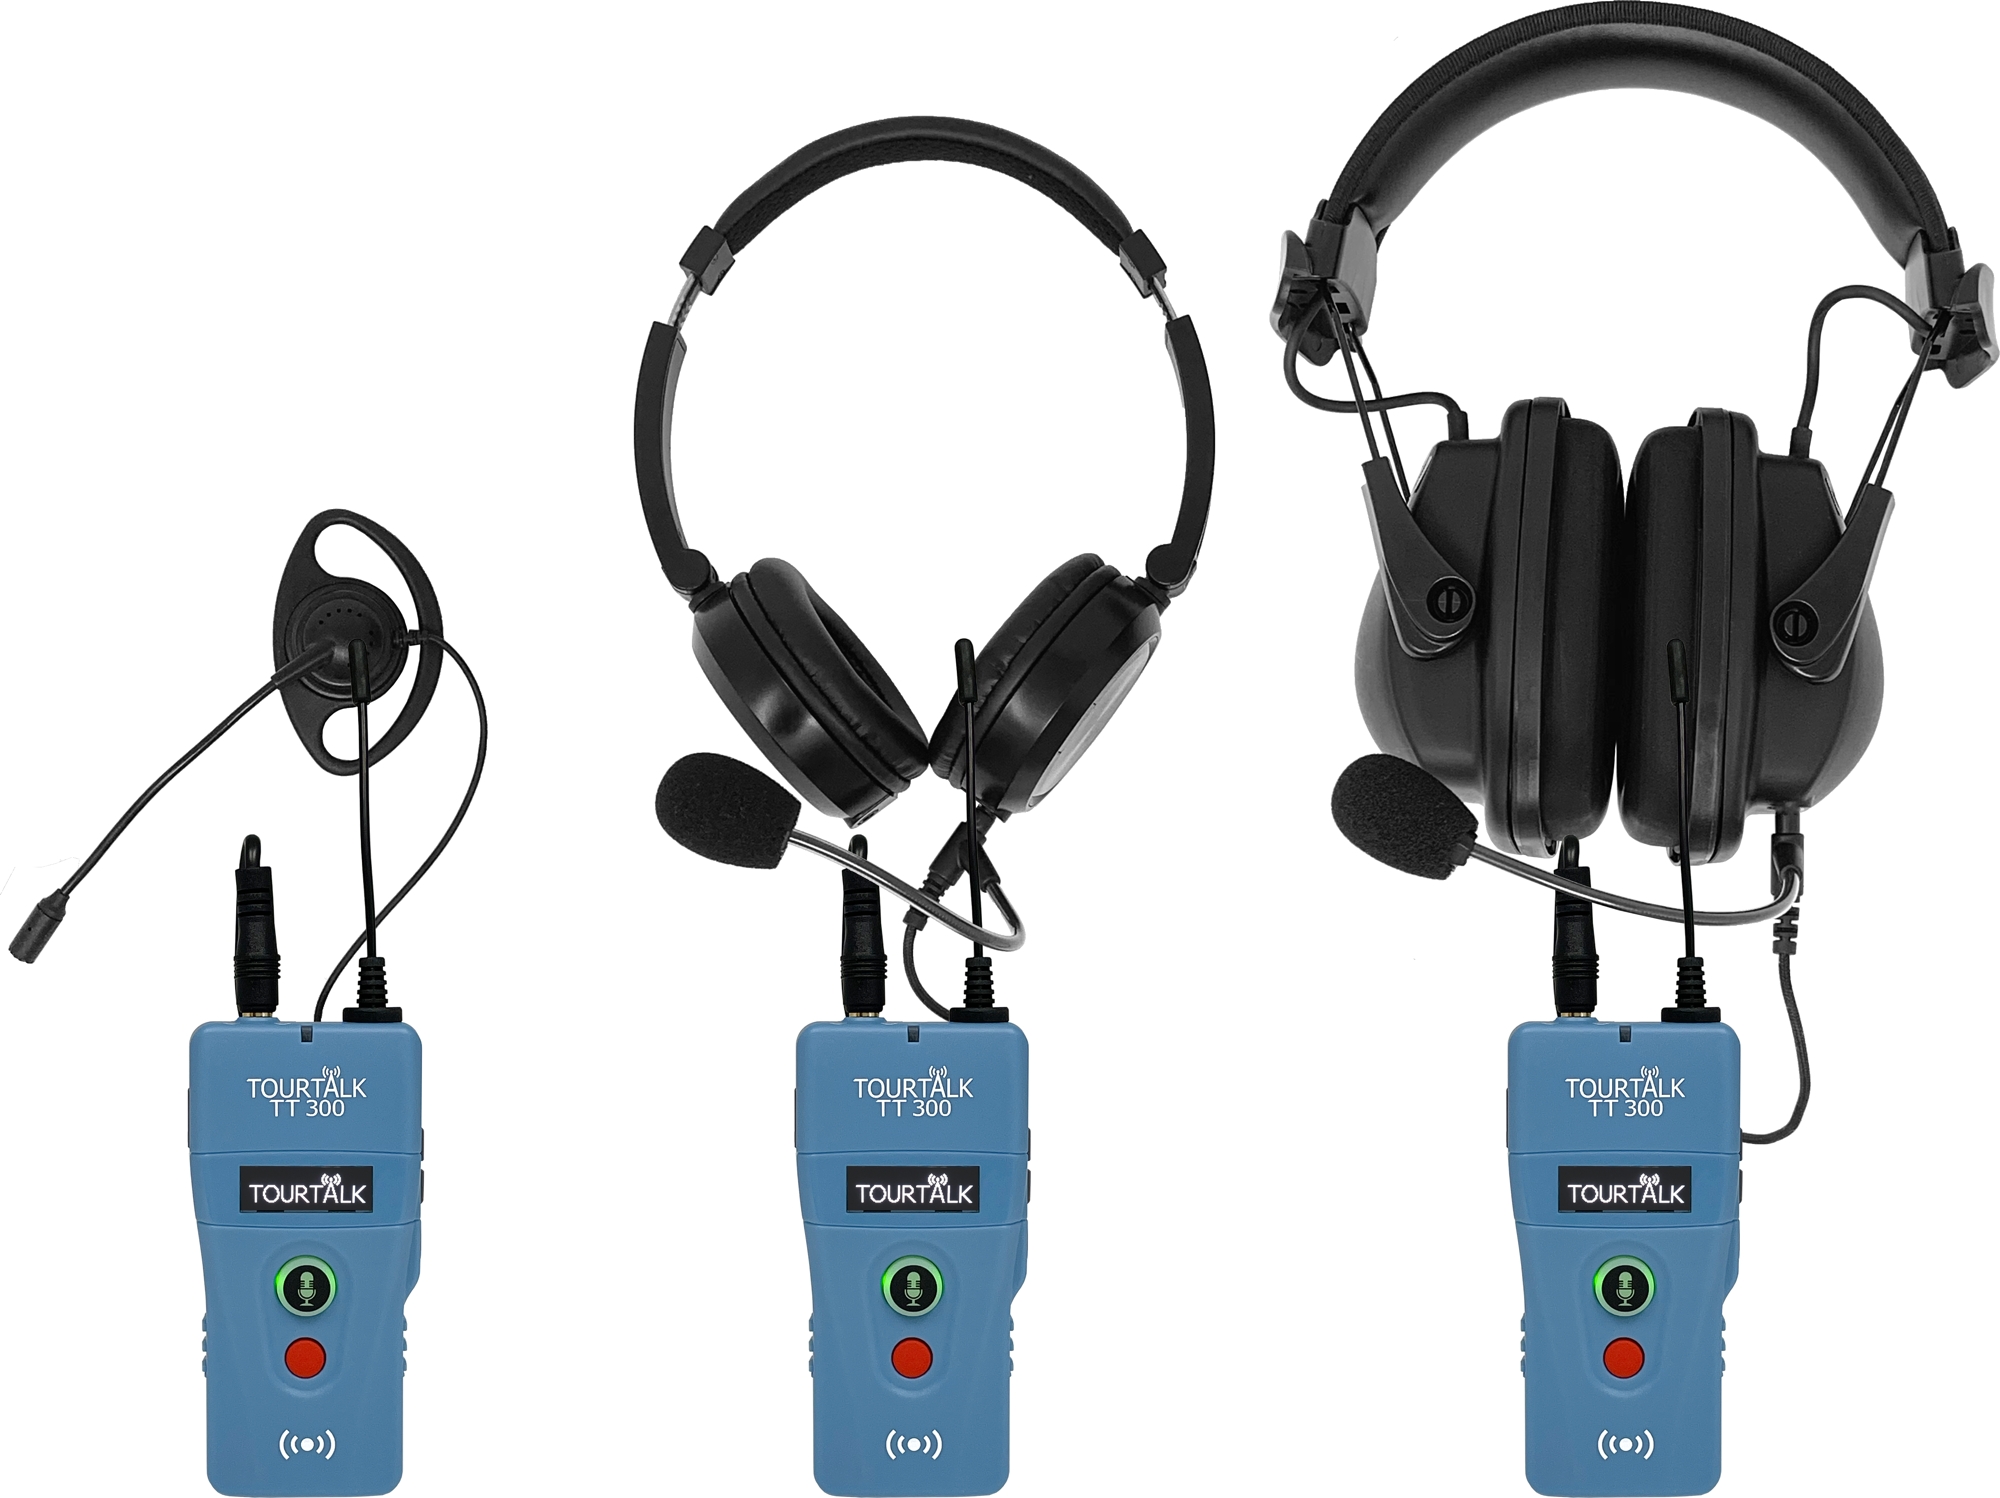 Wireless Tourtalk TT 300 full-duplex headsets